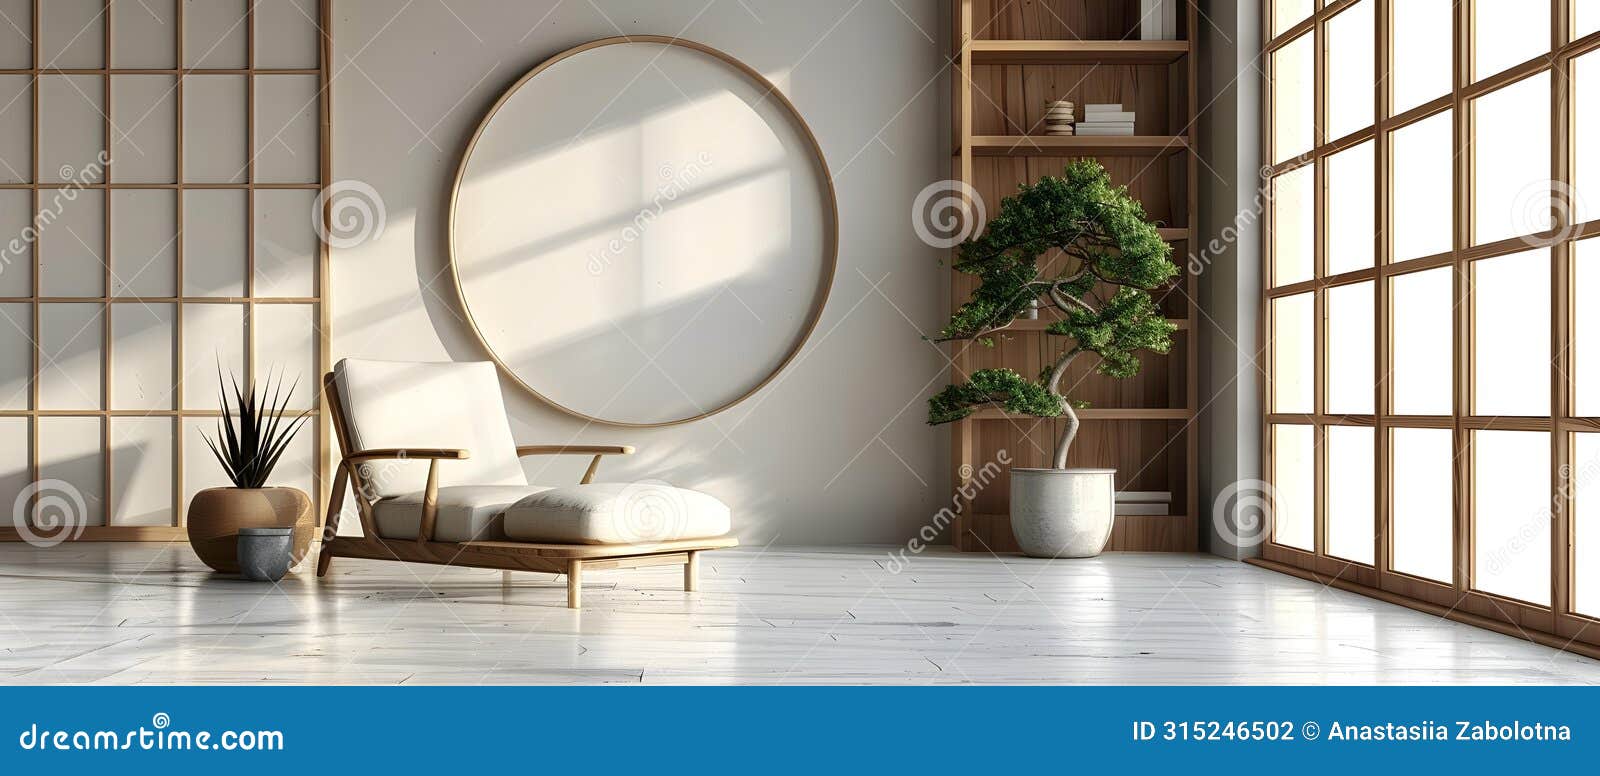 concept minimalist , zen decor, zeninspired minimalist studio with wood accents and bonsai